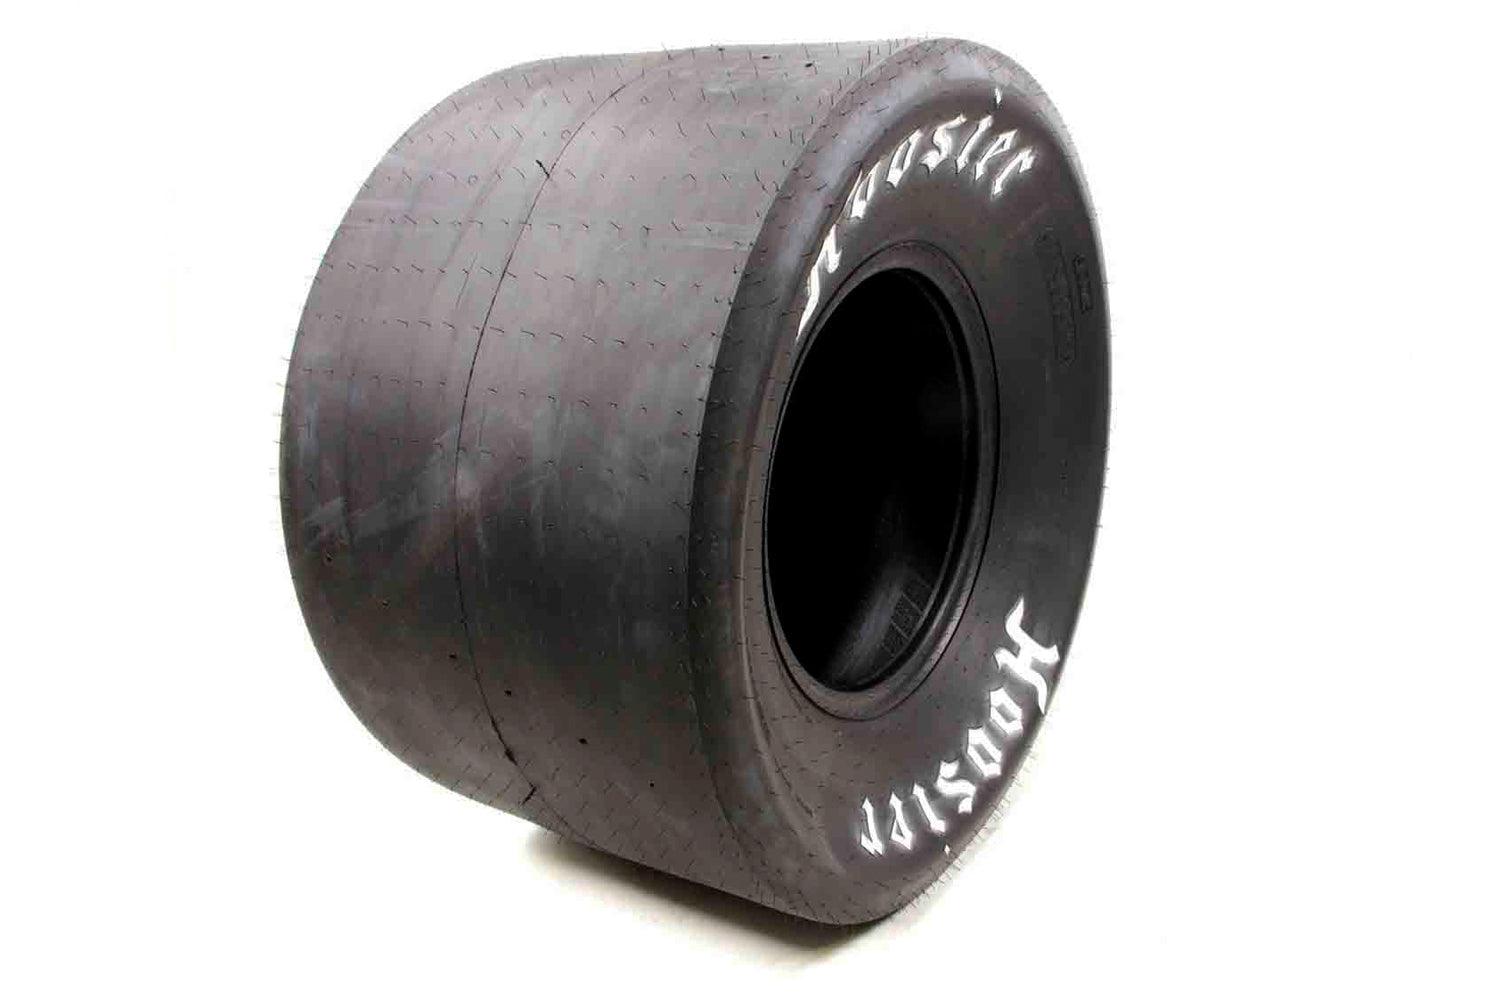 Drag Tire 34.5/17.0-16 W2021 Compound - Burlile Performance Products